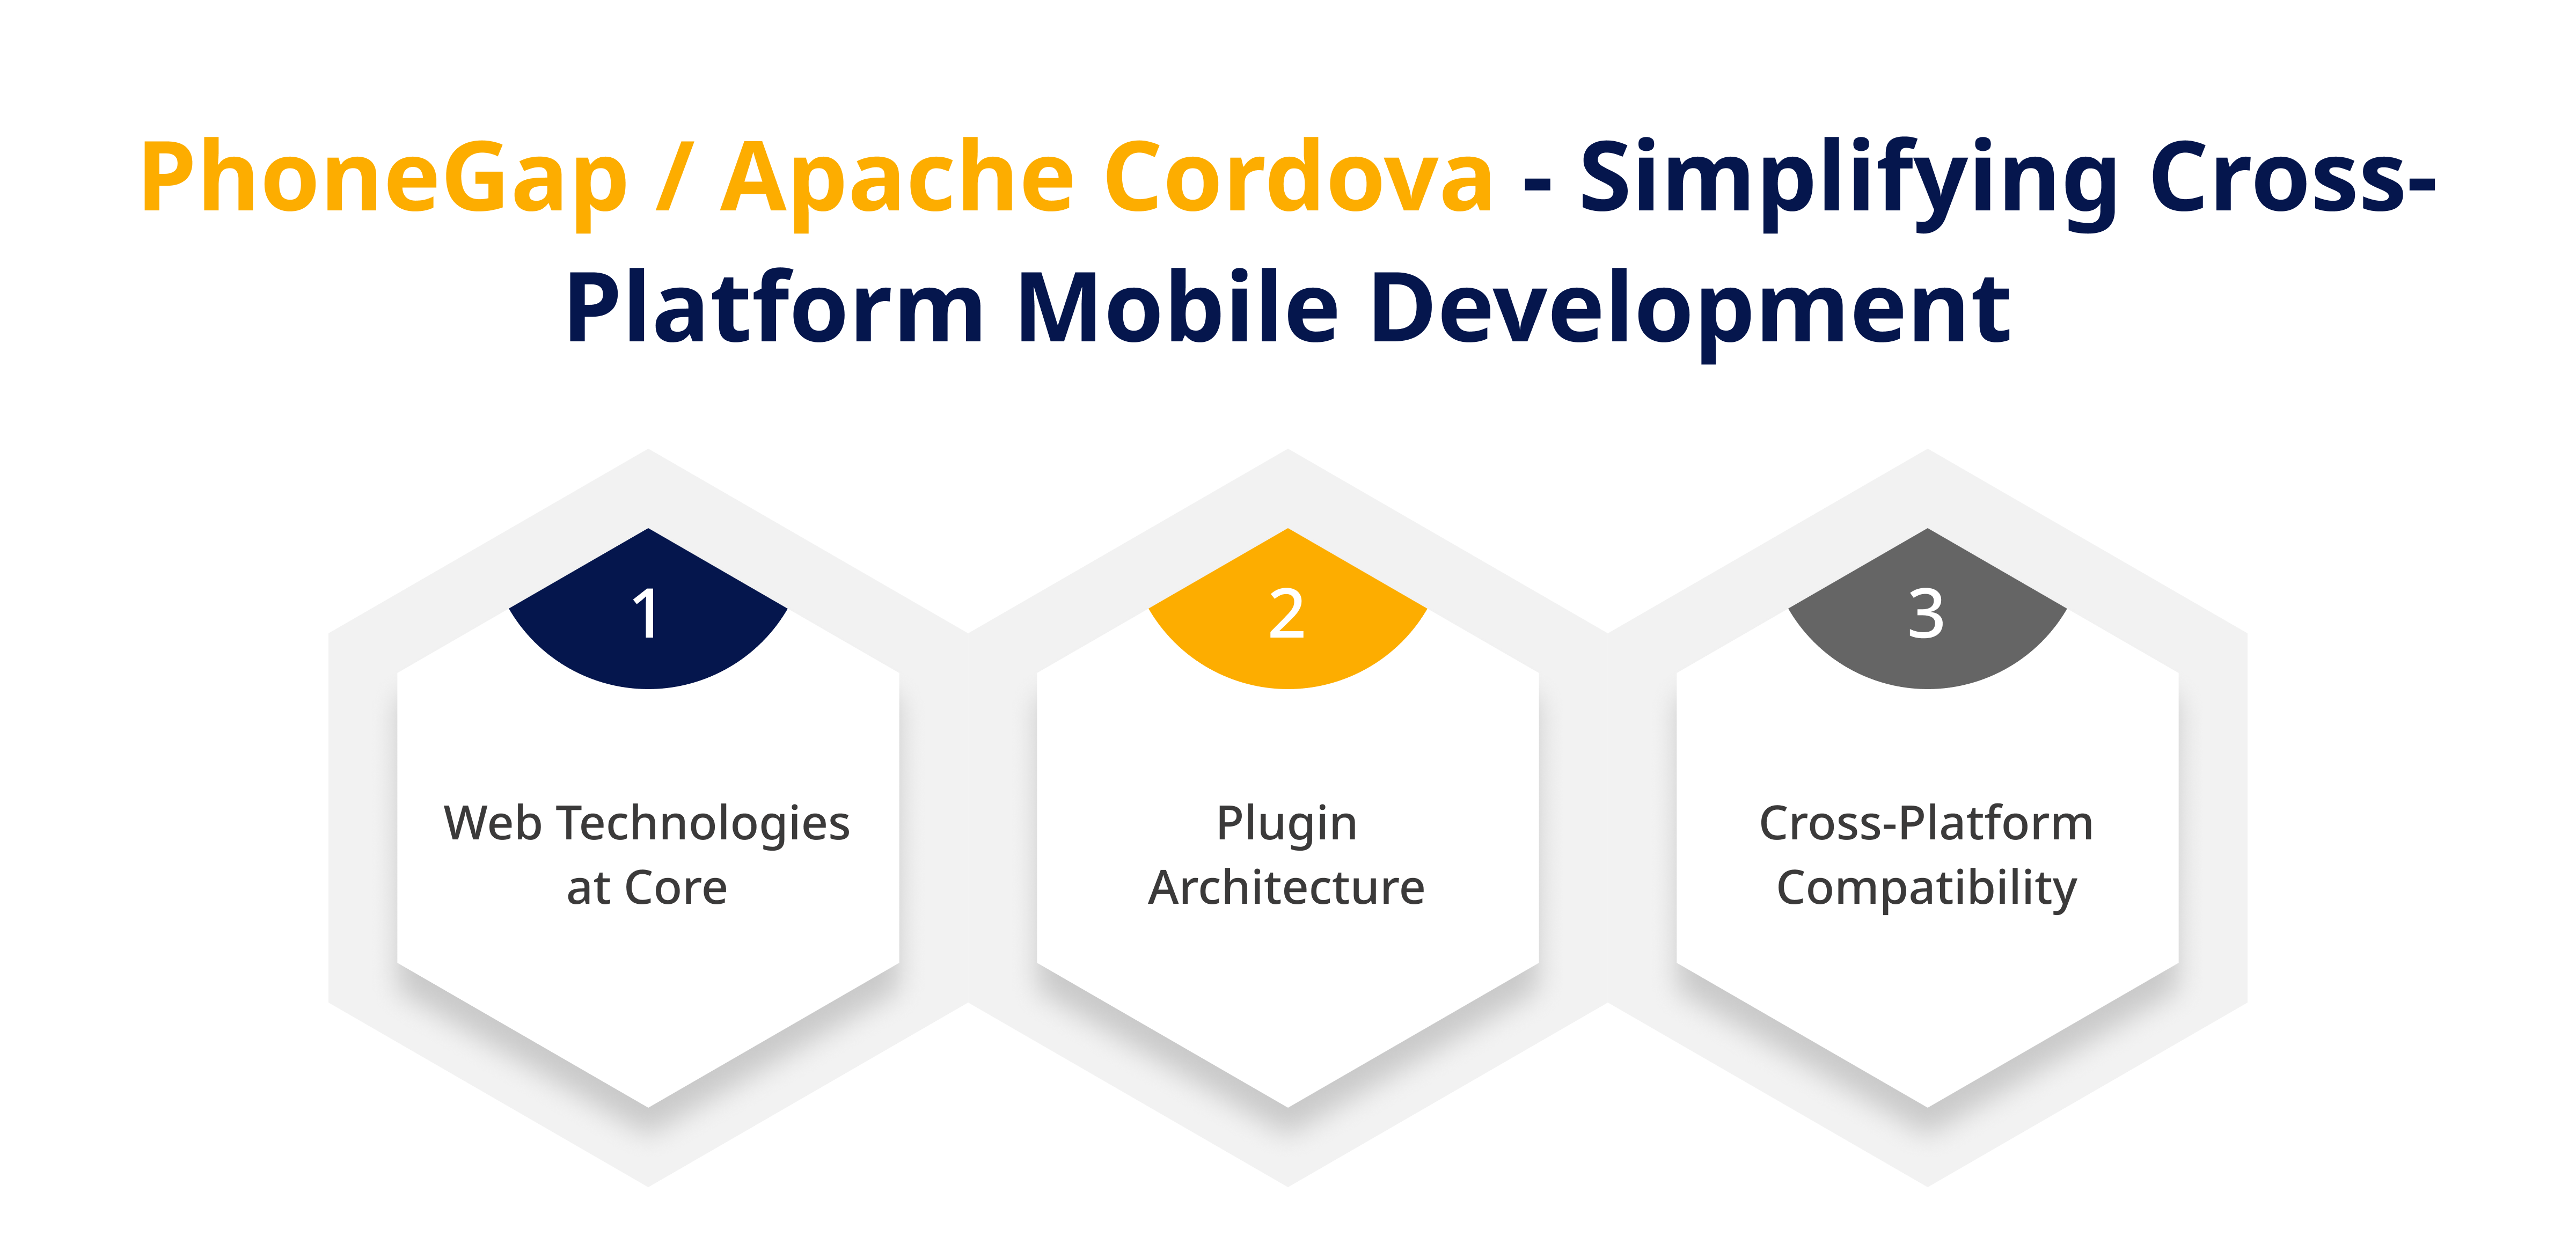 Apache Cordova Simplifying Cross Platform Mobile Development